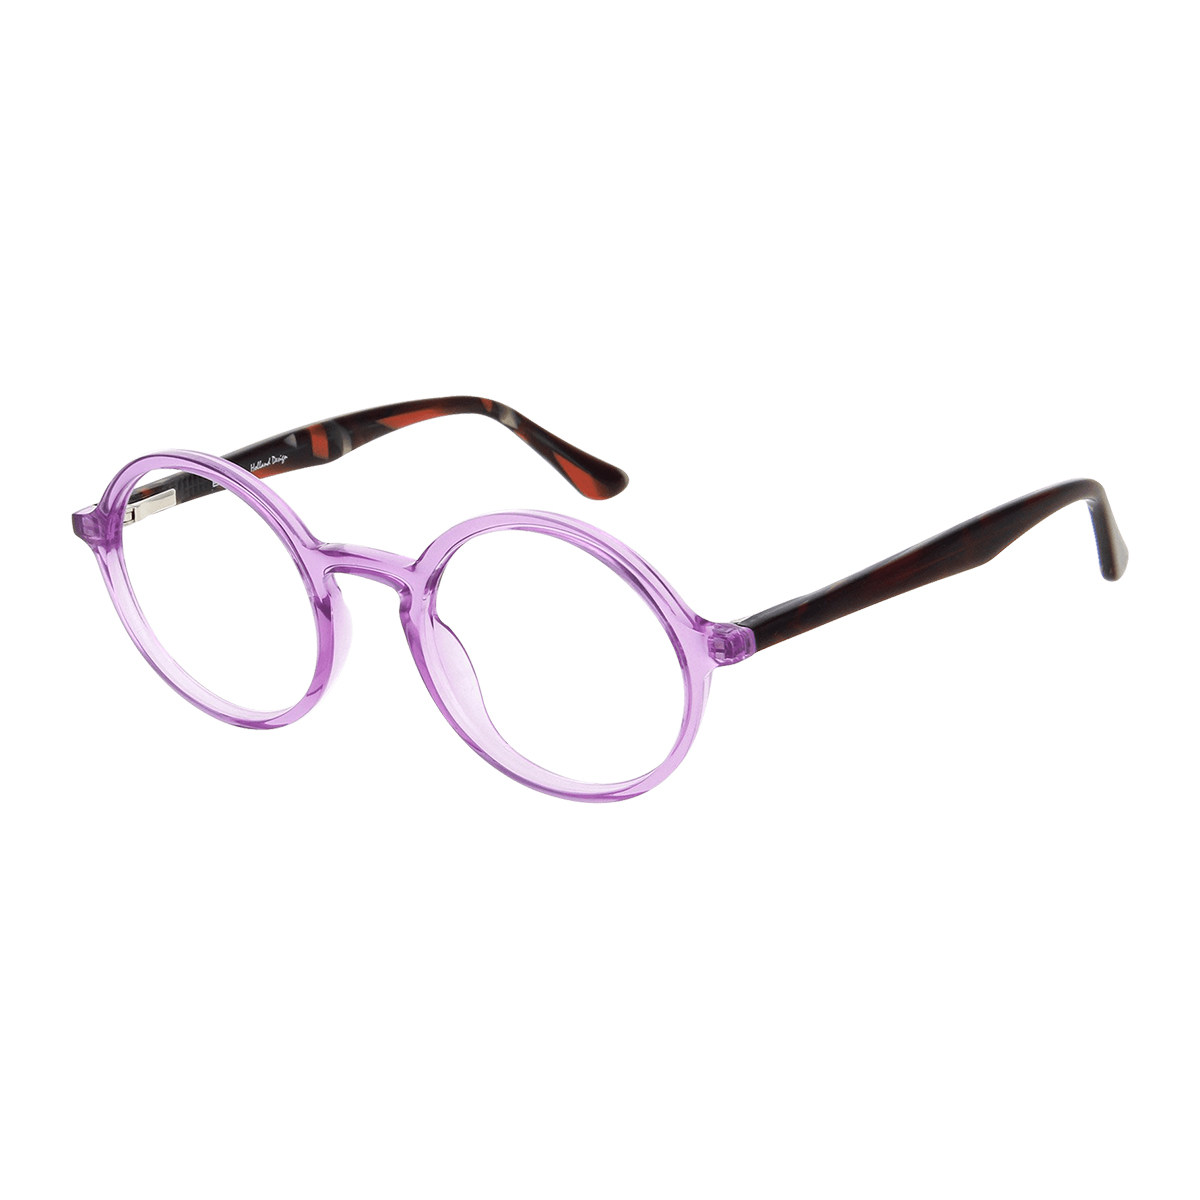 Ossa - Round Purple Reading Glasses for Women